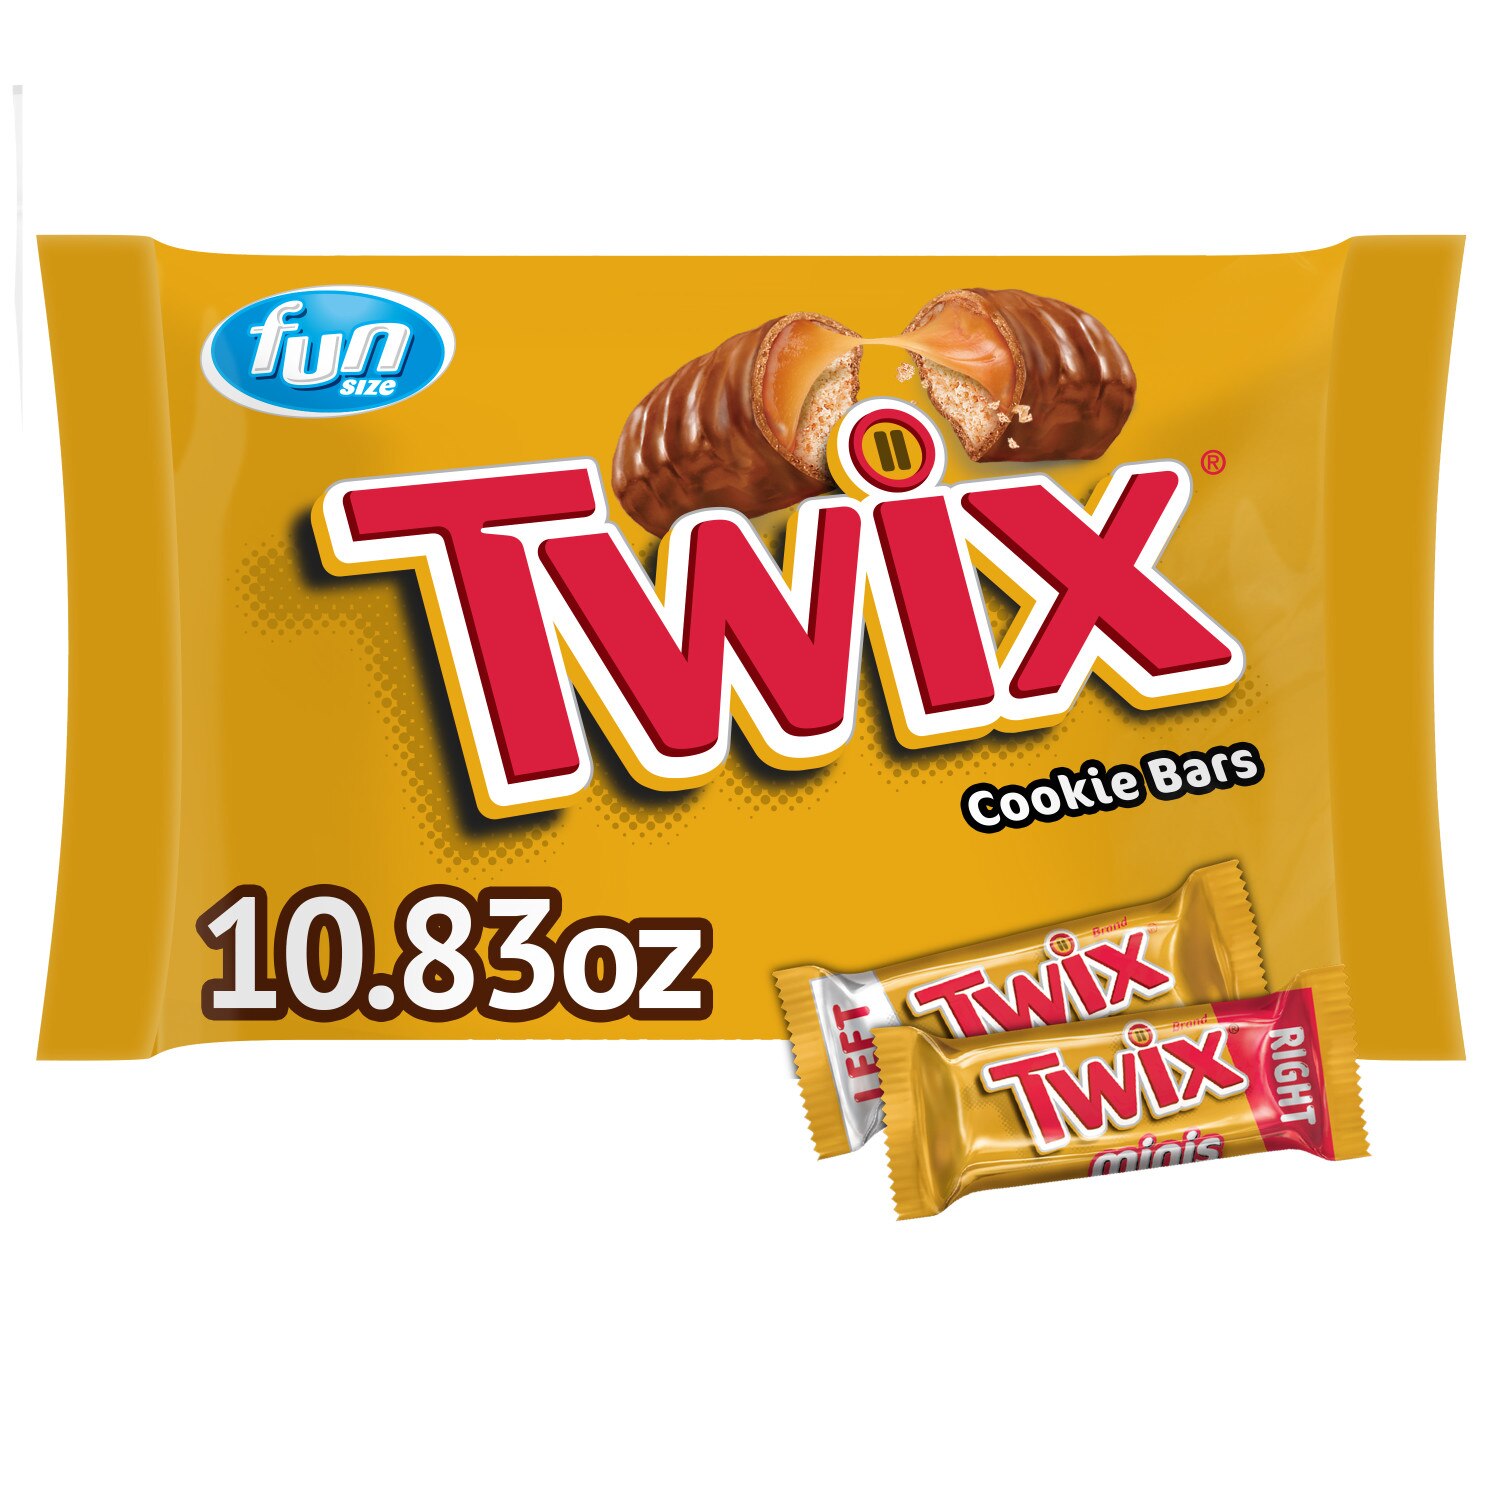 TWIX Caramel Chocolate Cookie Candy Bars, 10.83 oz.